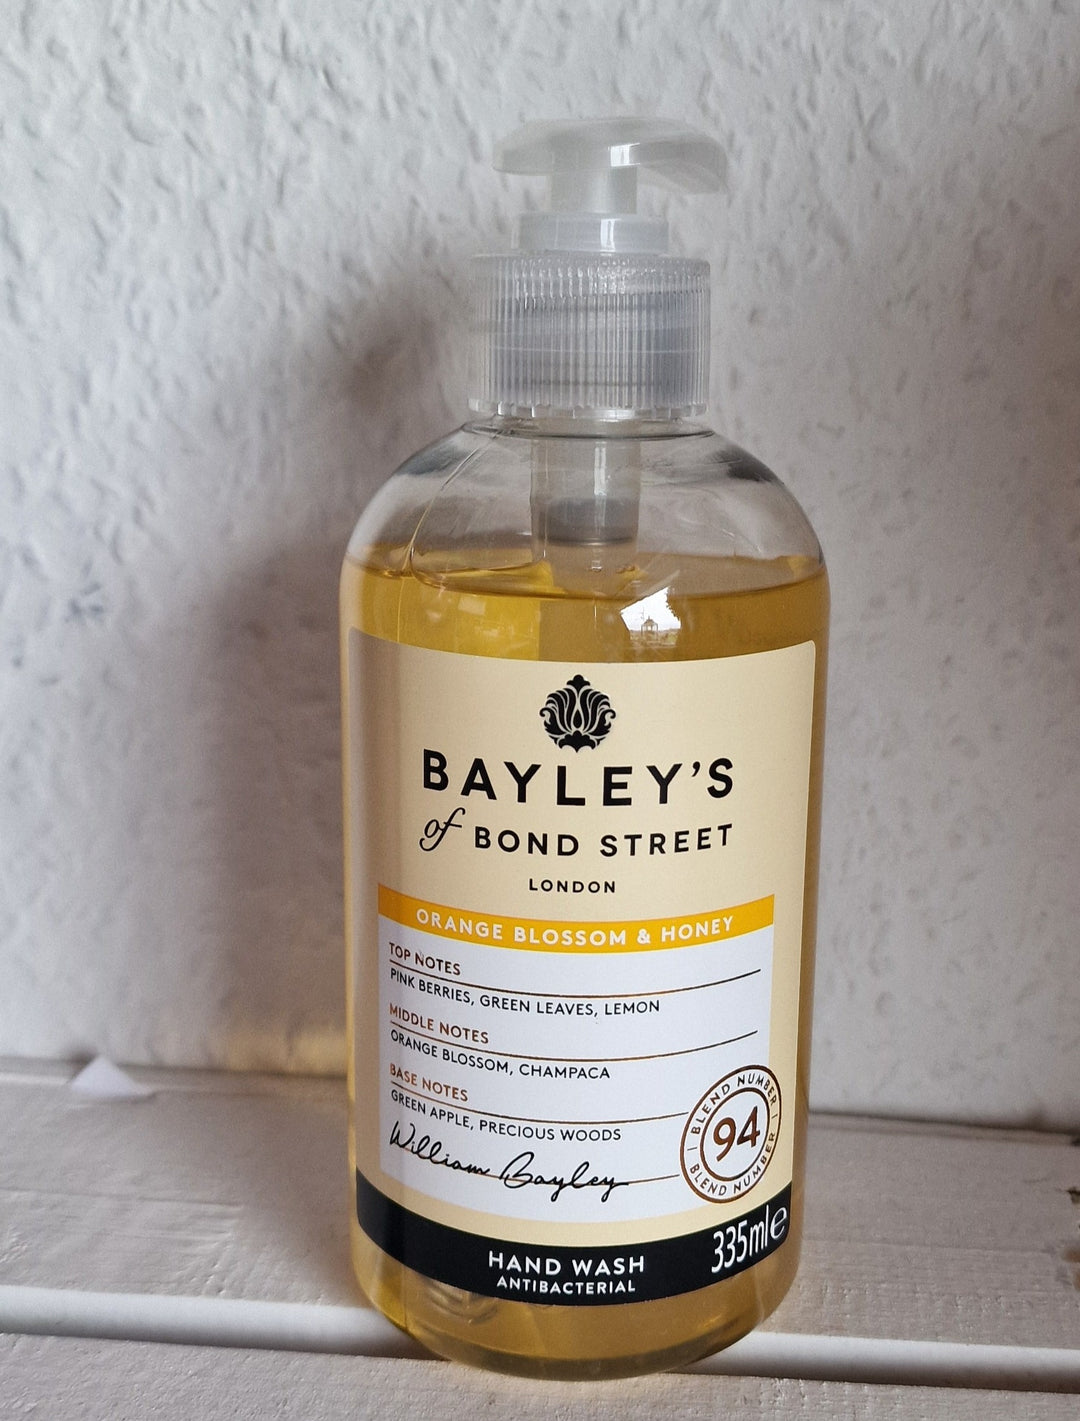 Bayley's of Bond Street Flüssigseife 335ml "Orange Blossom & Honey"